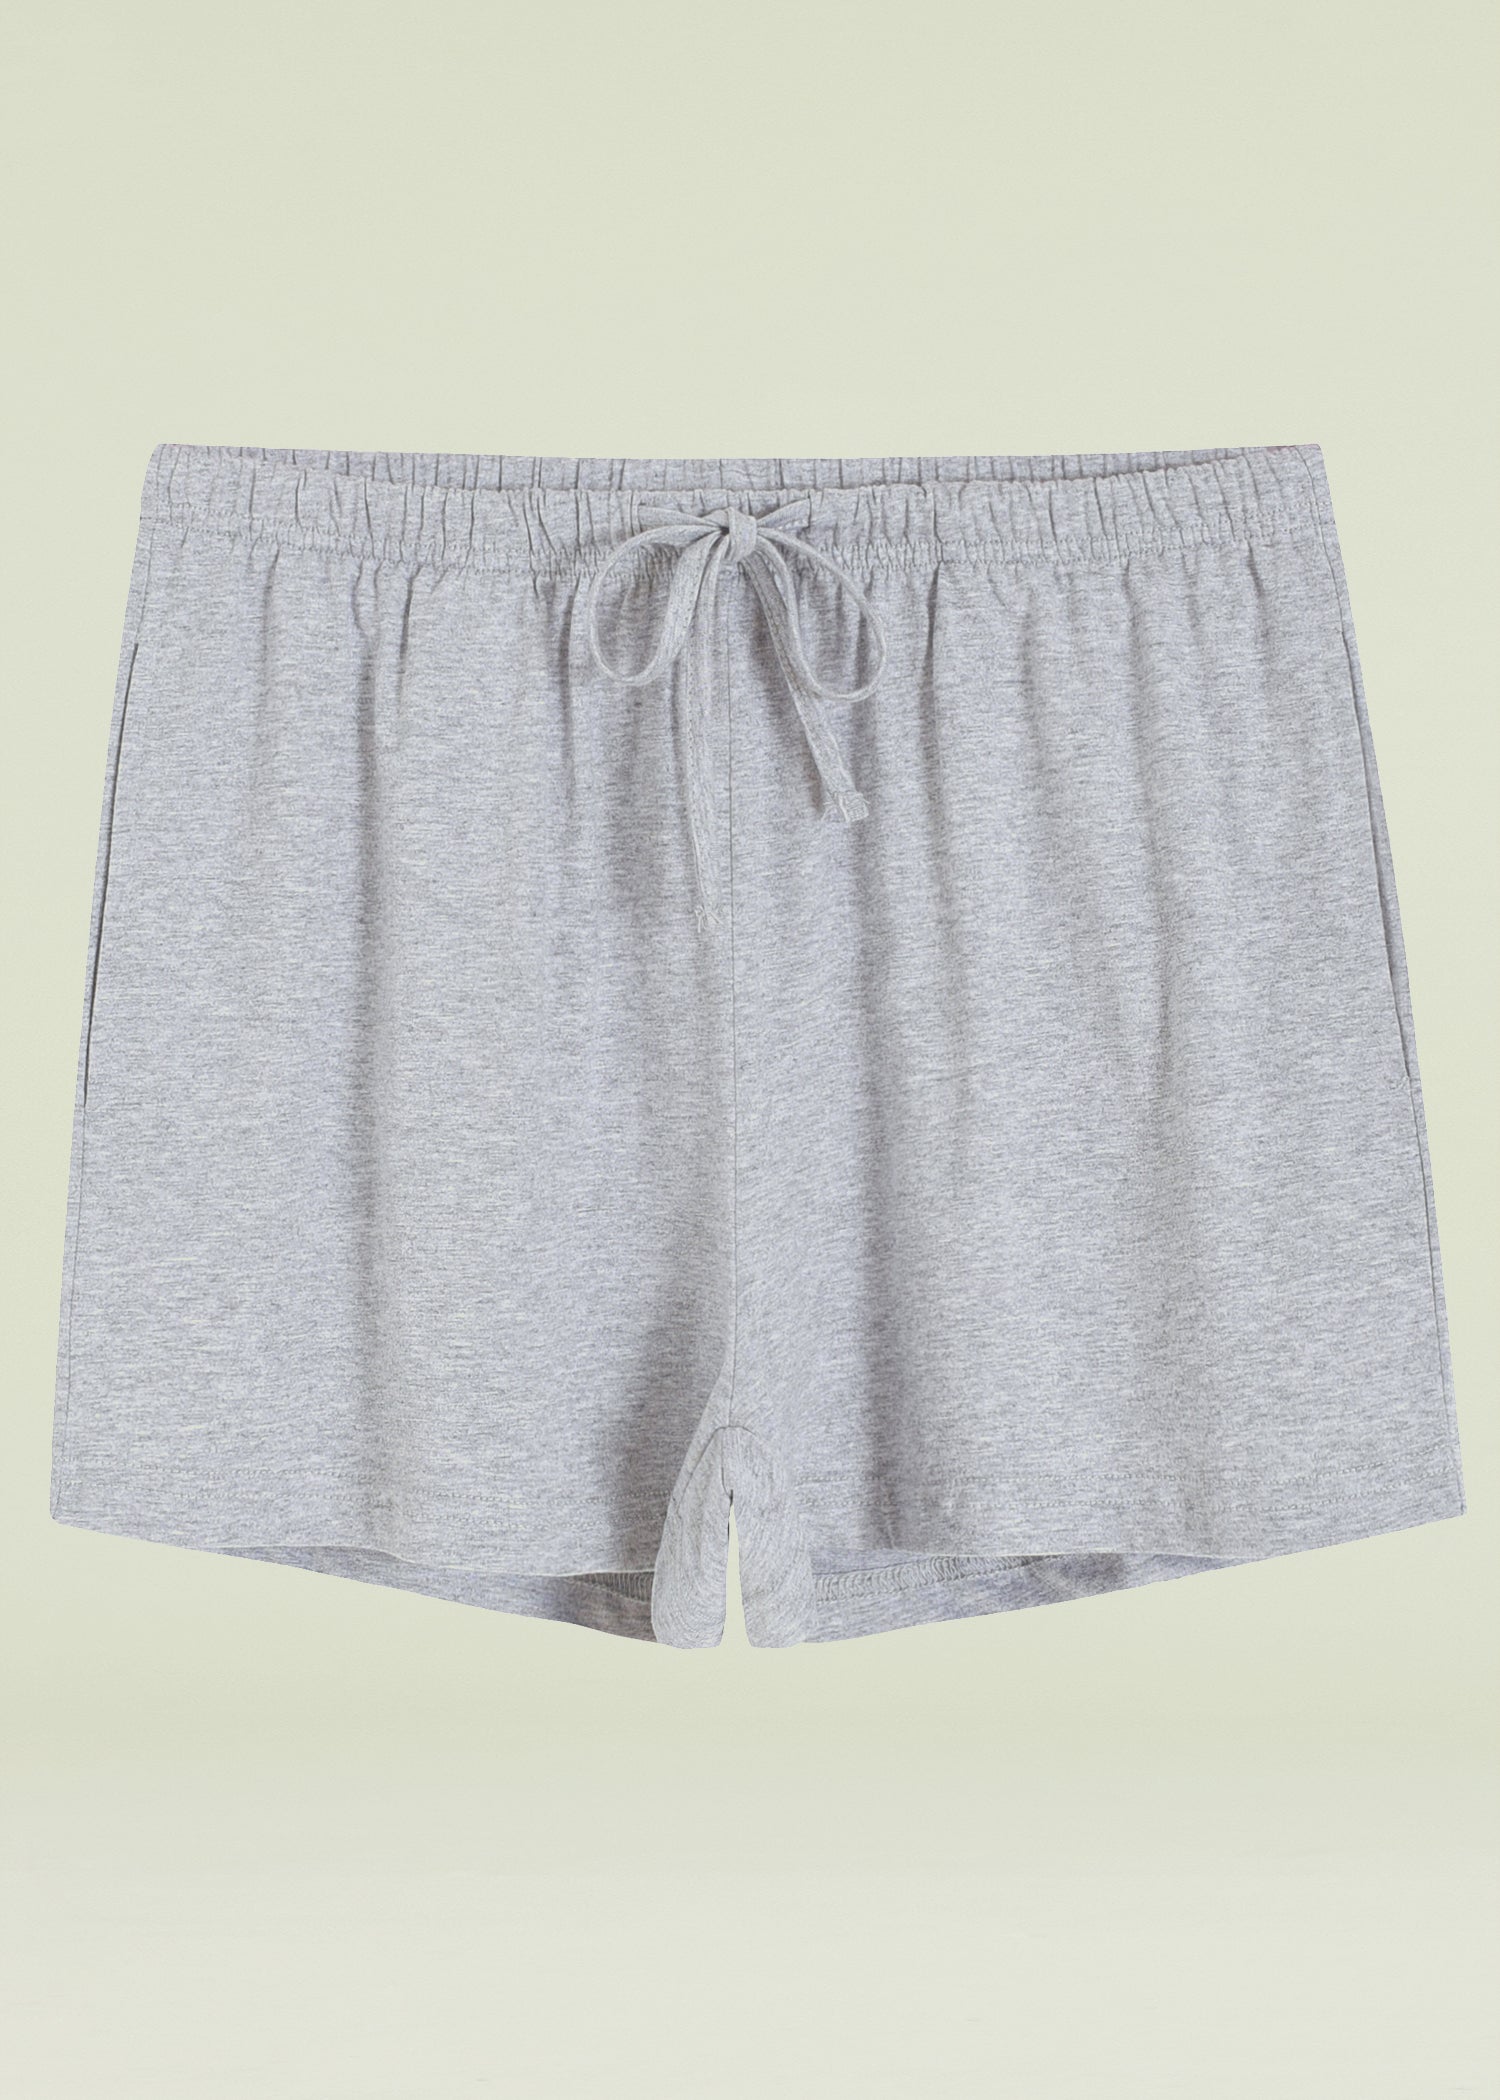 Women's Cotton Pajama Shorts Knit Lounge Shorts with Pockets – Latuza